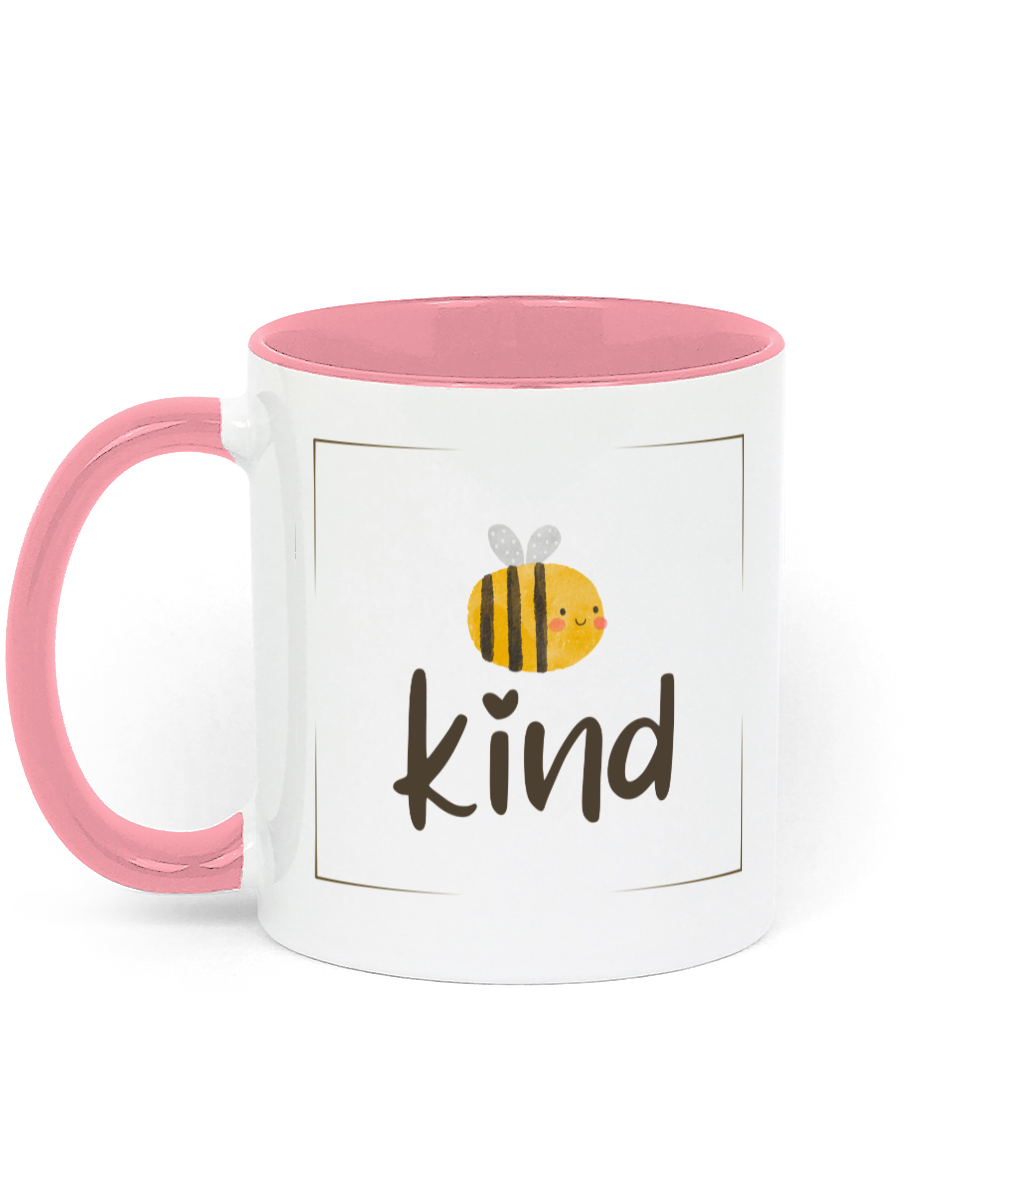 Be Kind Mug.11 oz mug. Daily Affirmations, Motivation, Inspiration. Perfect Gift.